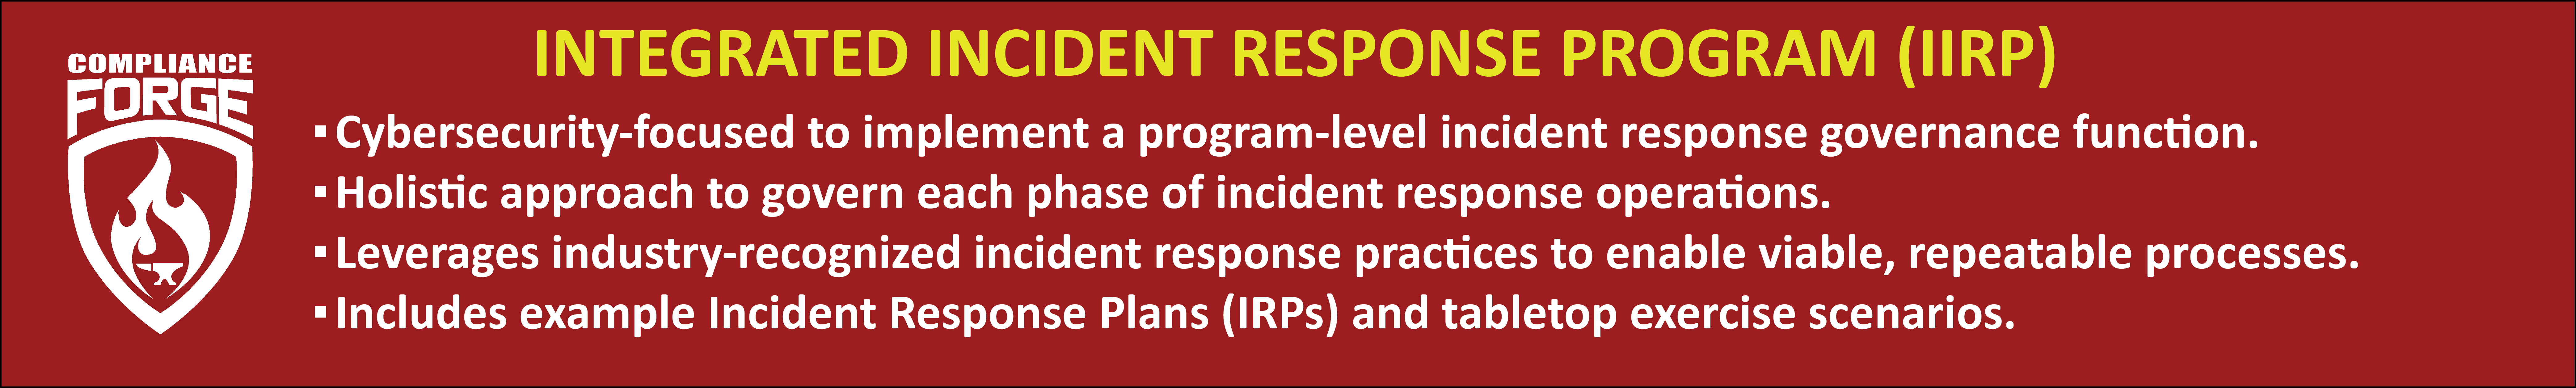 Integrated Incident Response Program